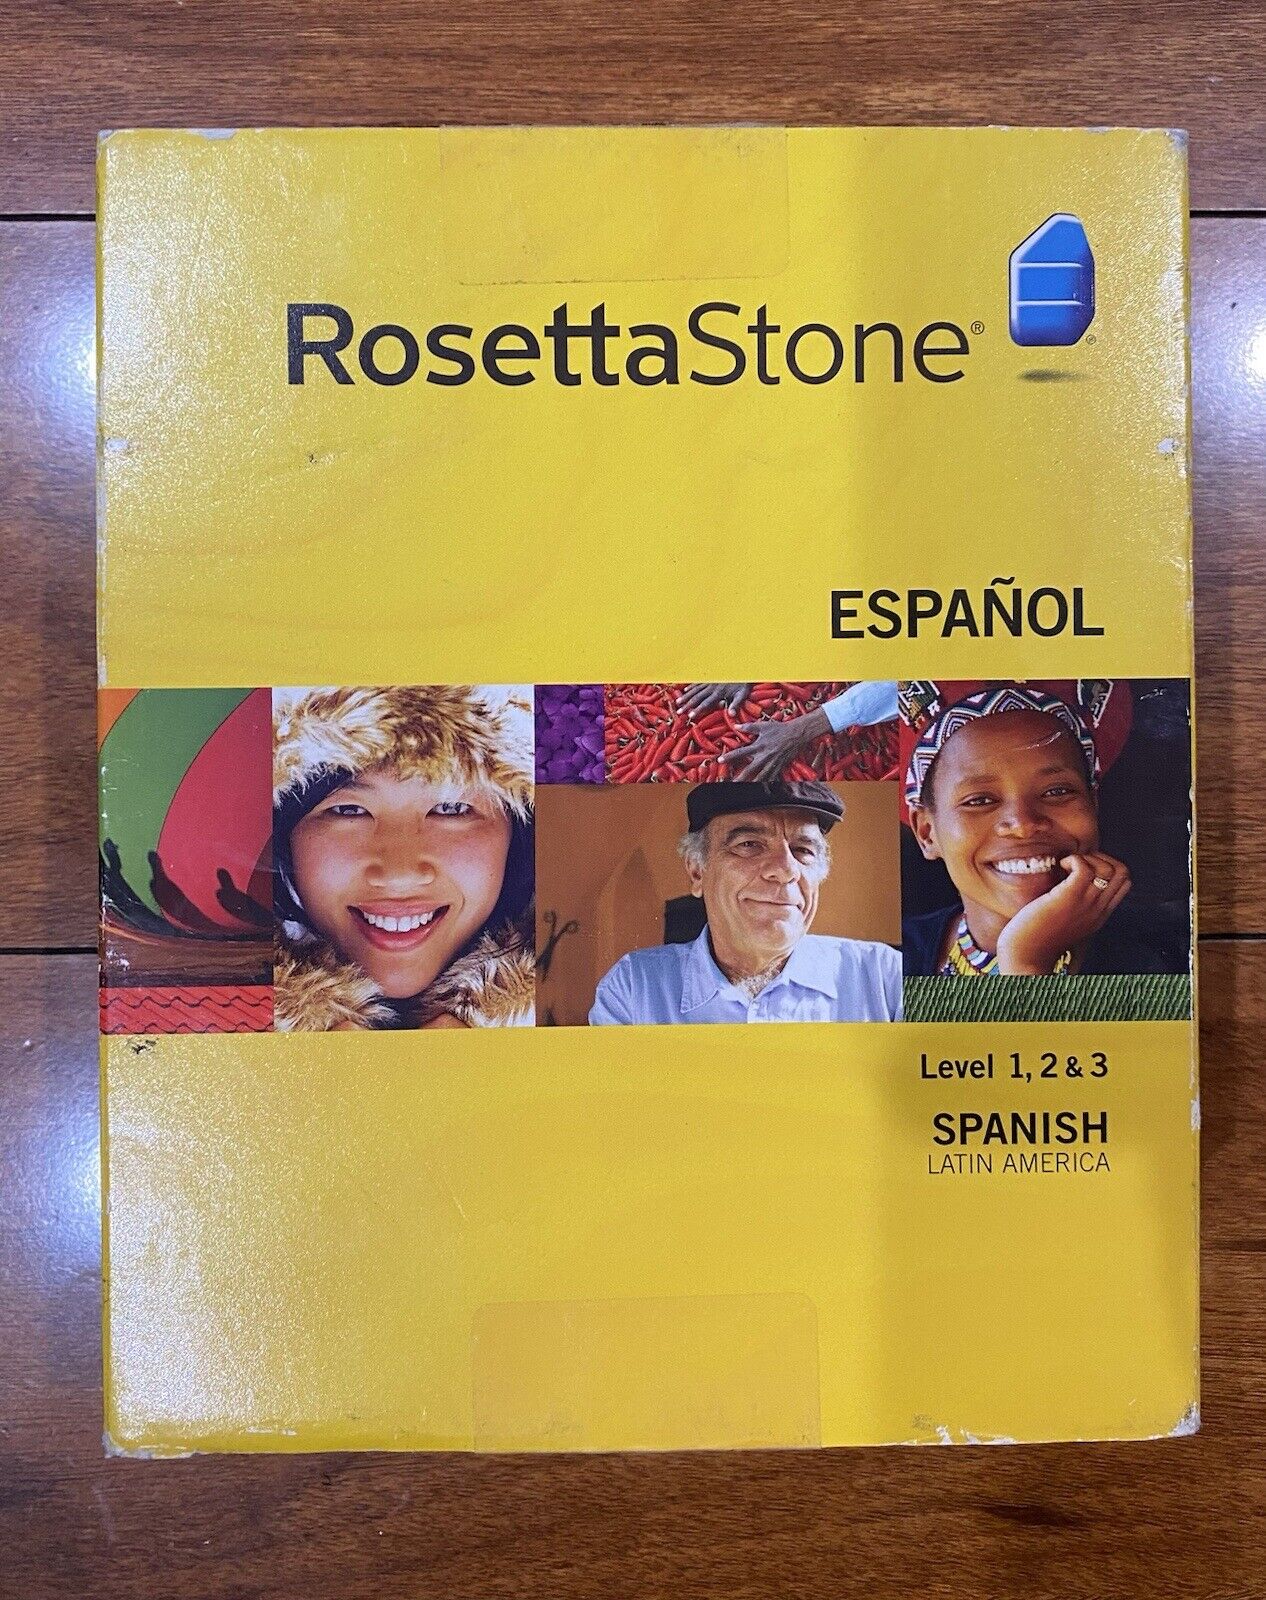 Rosetta Stone Spanish Latin America - Level 1-3 CD 1 2 3 - Espanol For PC or Mac